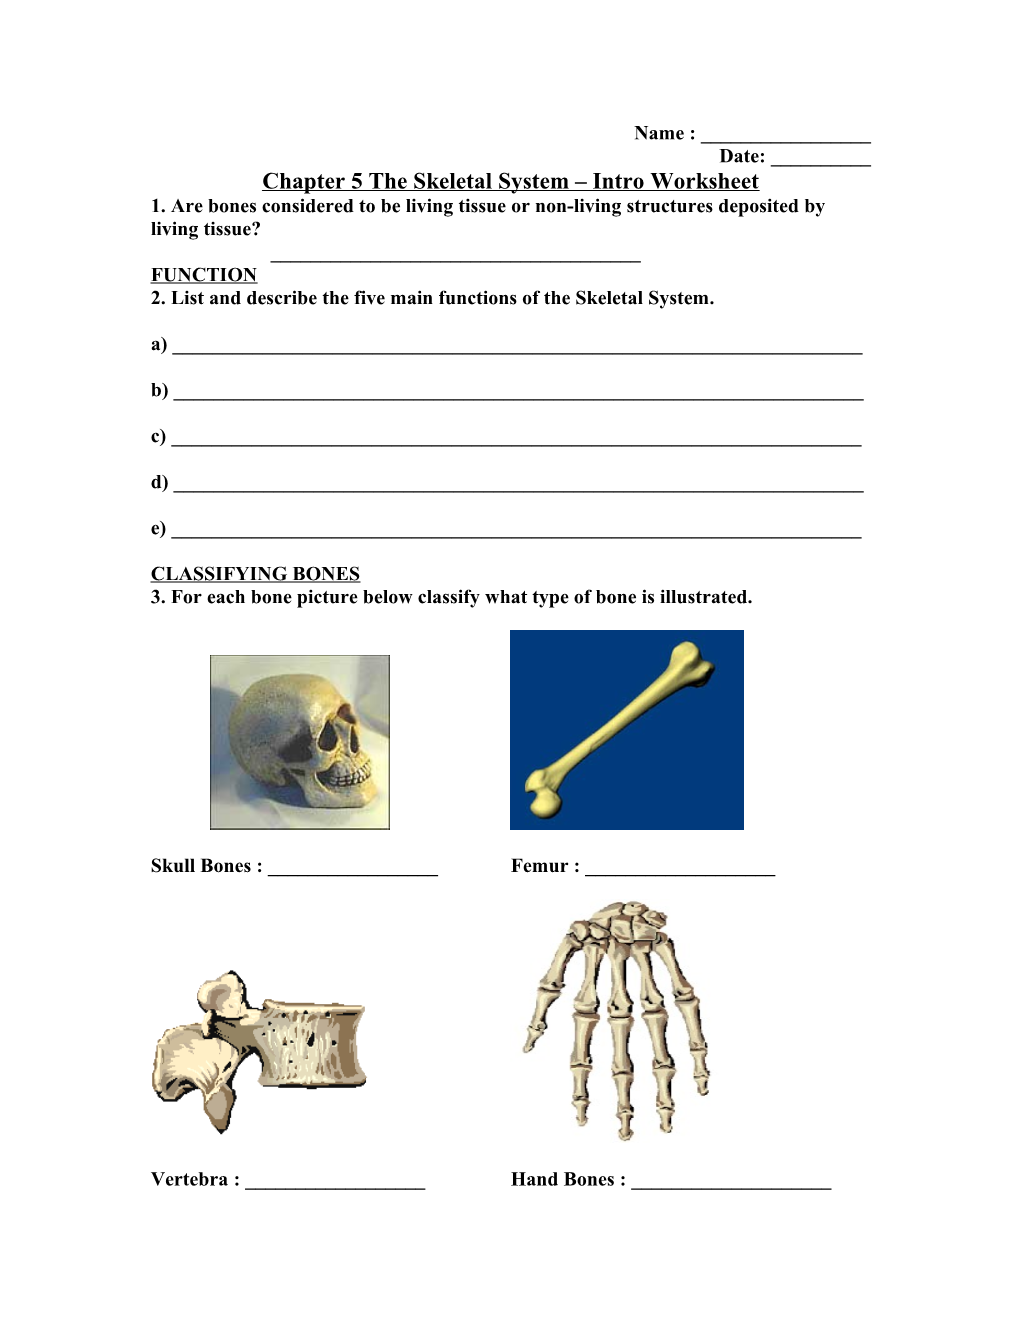 Chapter 5 the Skeletal System Intro Worksheet